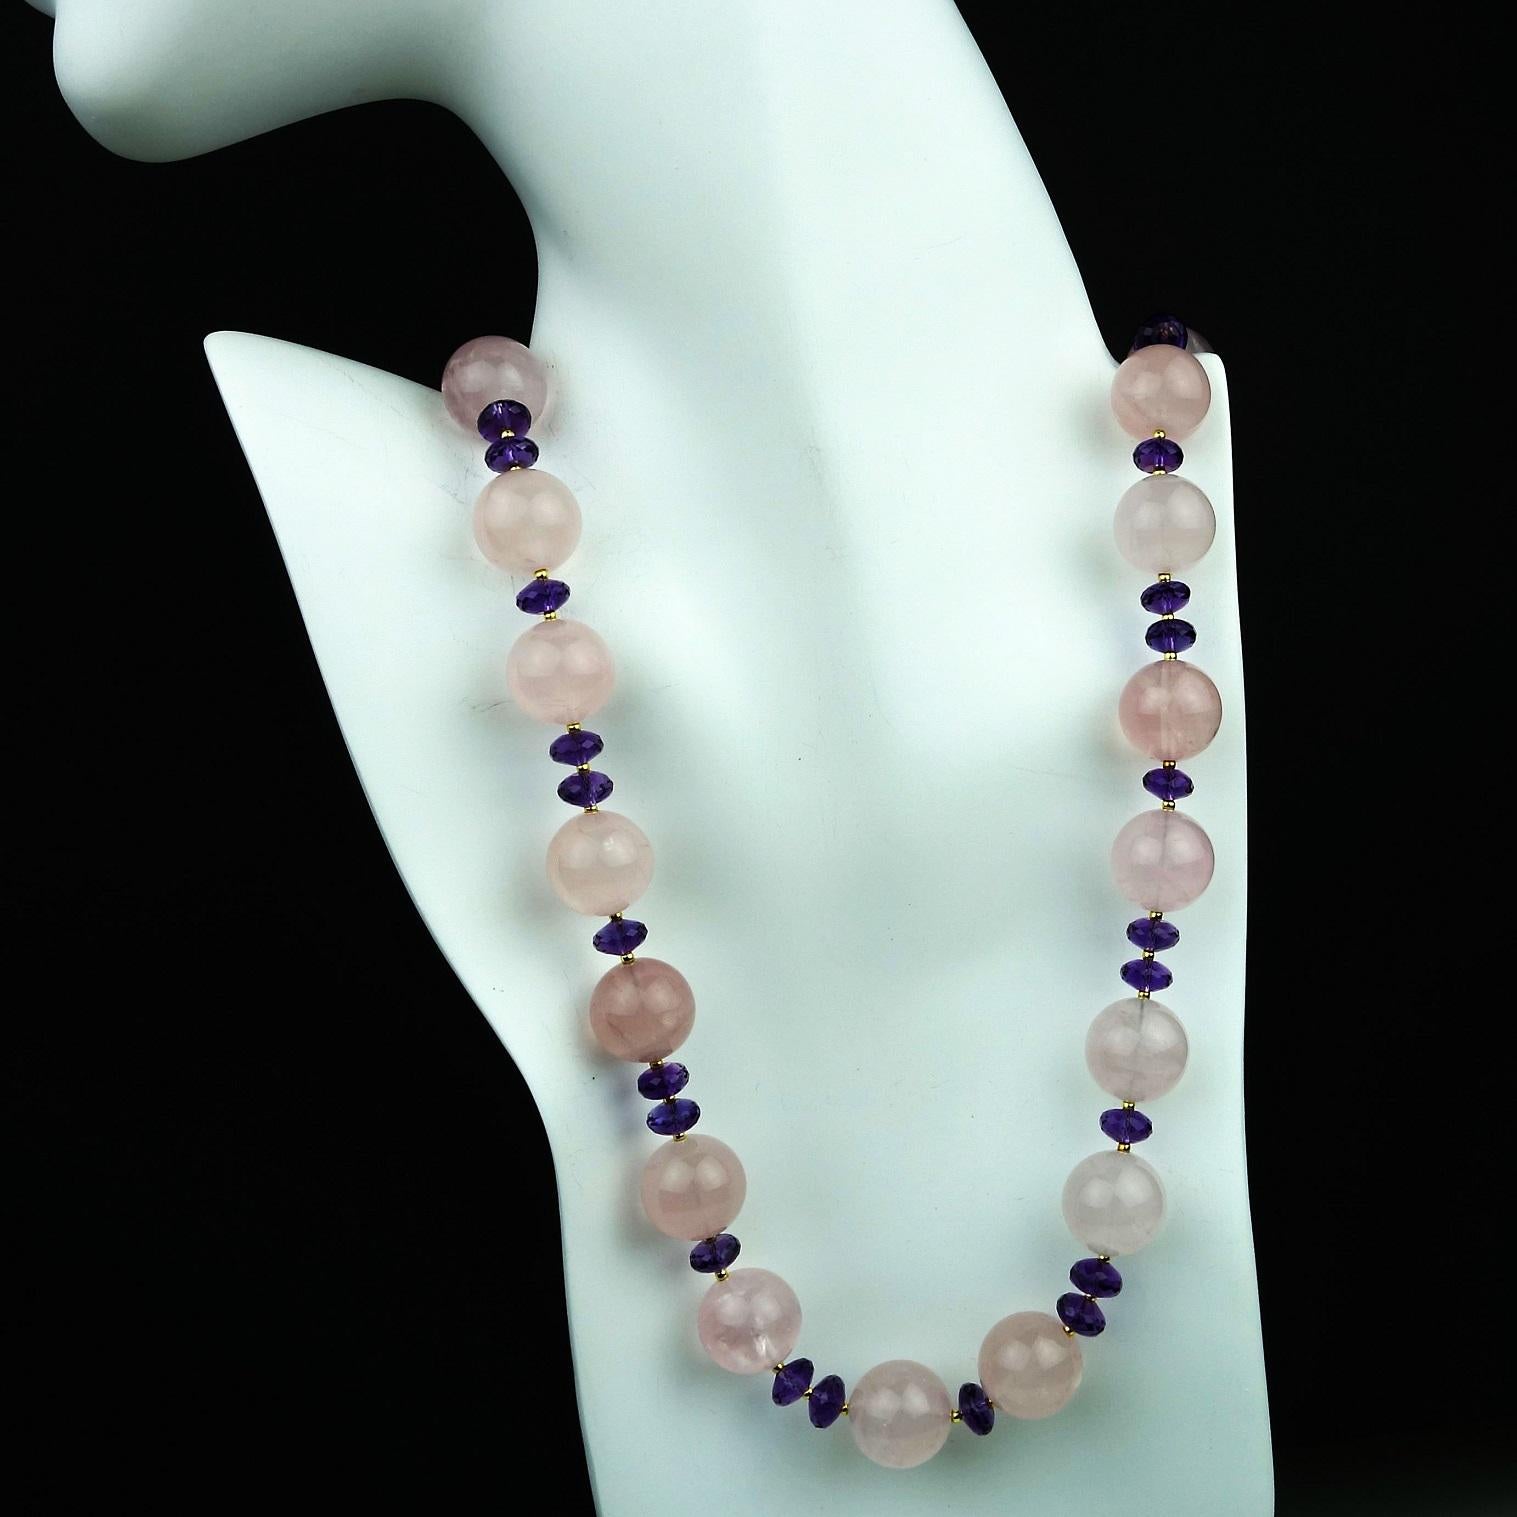 Bead AJD Translucent Rose Quartz and Amethyst Necklace